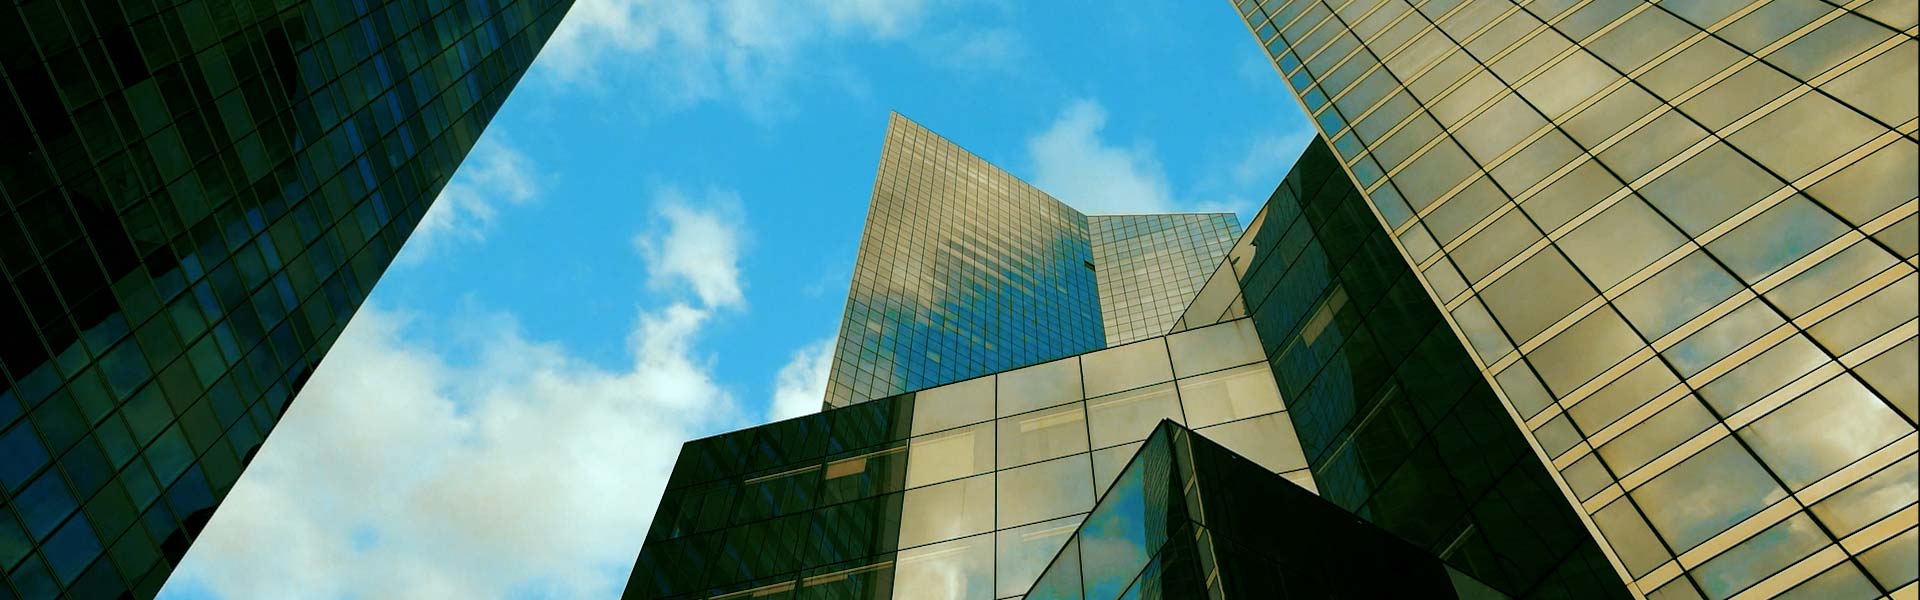 Corporate image of a city skyline against a blue sky